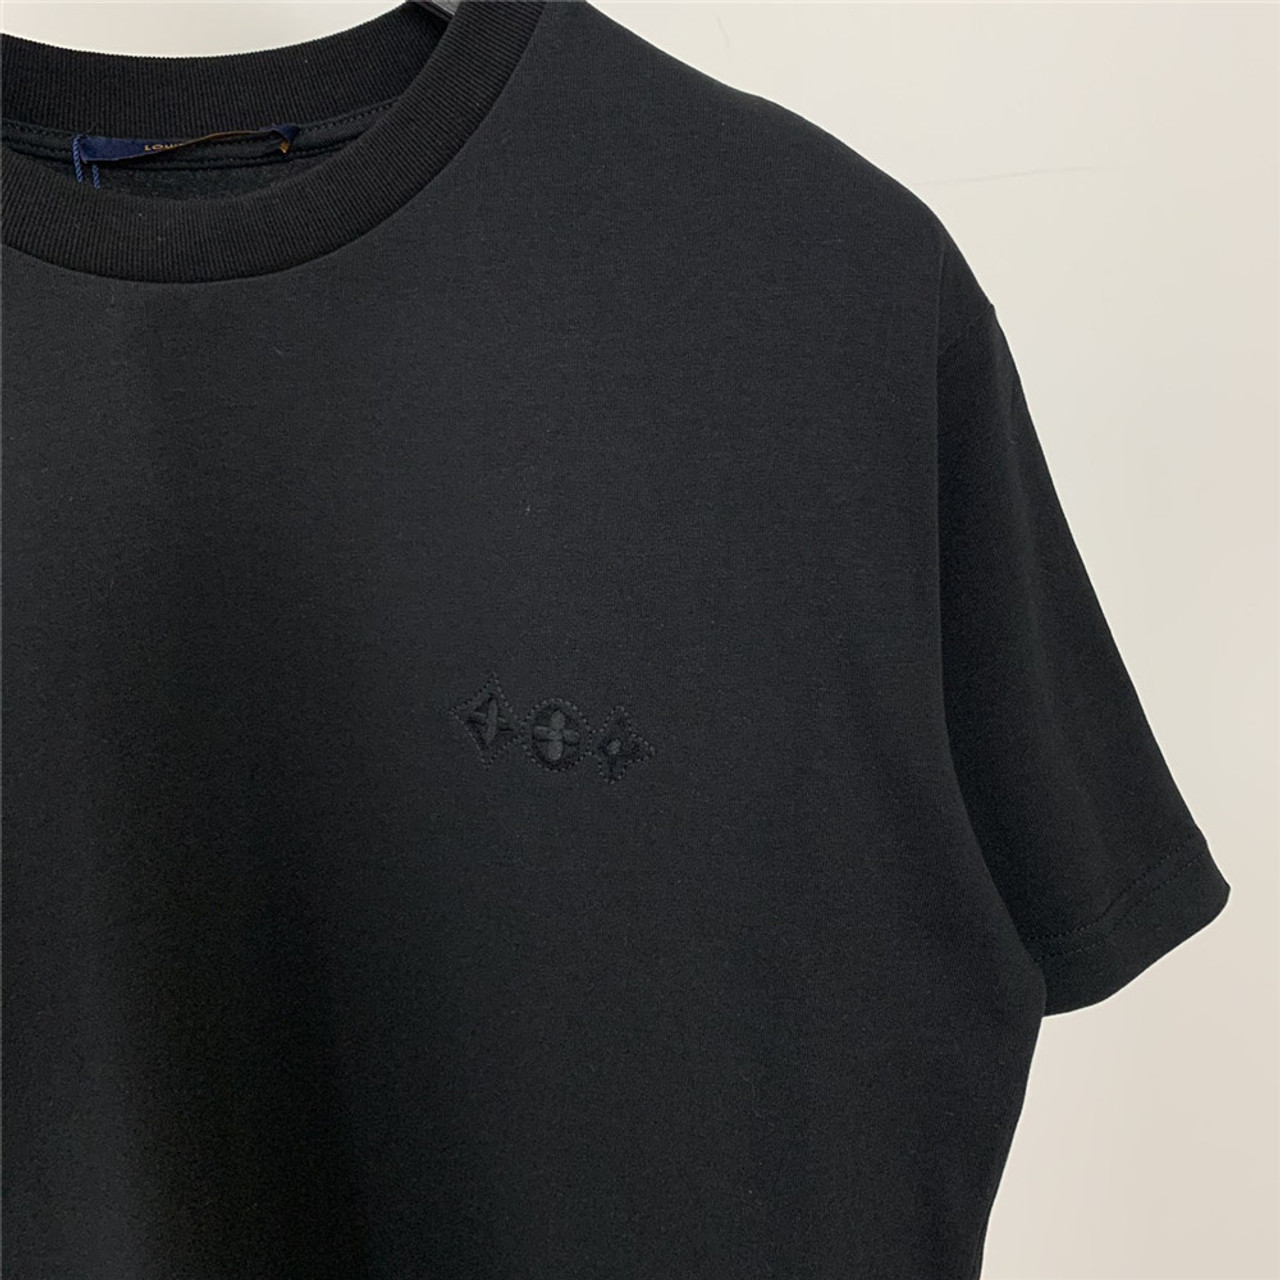 Louis Vuitton ✅Reflective Logo T-shirt Men Size XXL. Rare